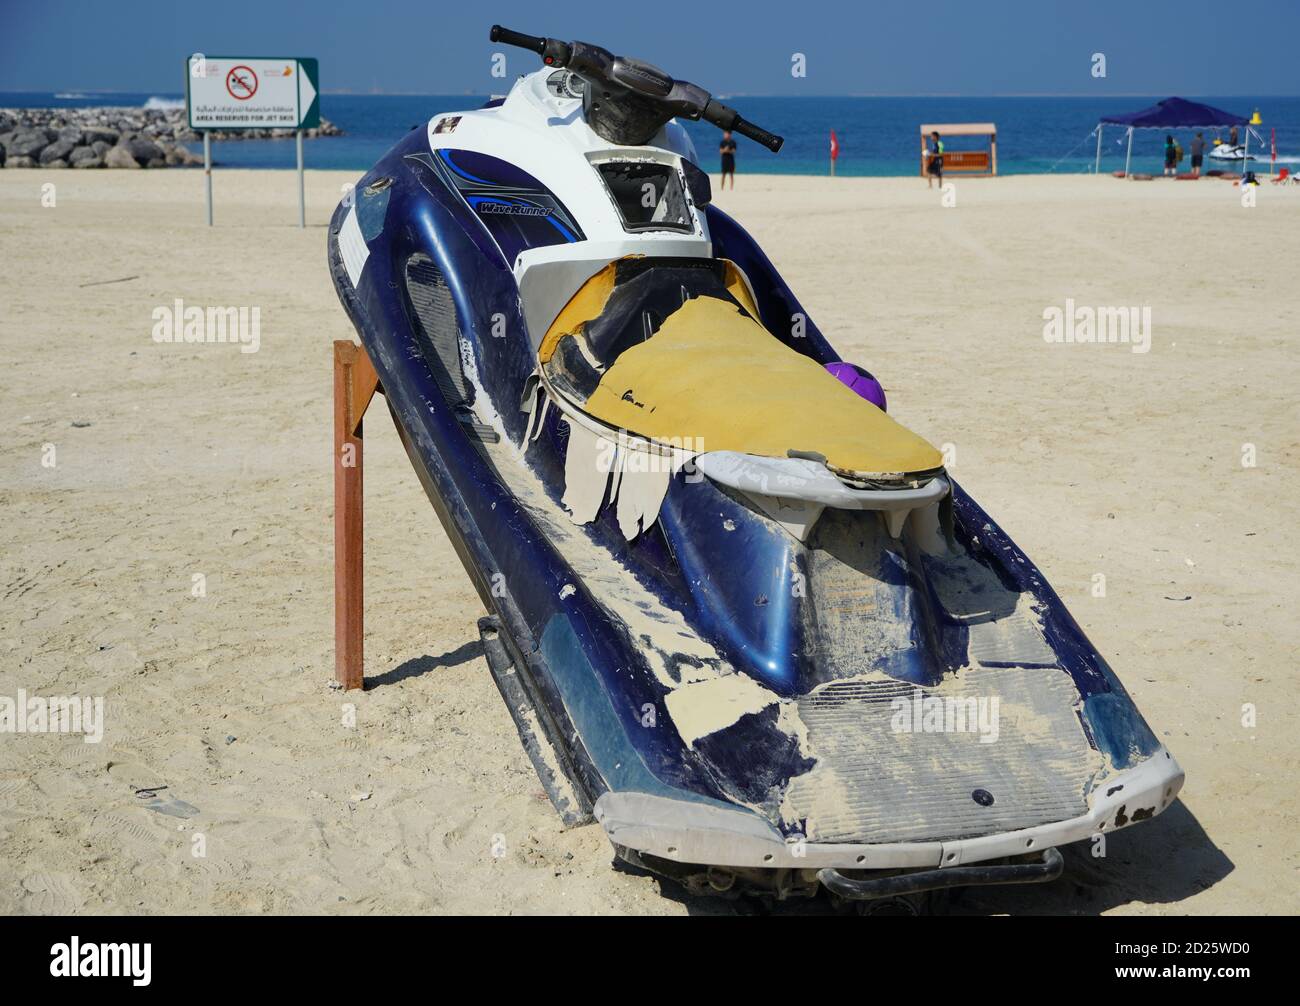 Dirty Old Jet Ski Am Strand Der Ferienzeit Geparkt. Old Jet Skis On The Beach On Wooden Trailer. Blue And White Jet Ski - Dubai Vae Januar 2020 Stockfoto